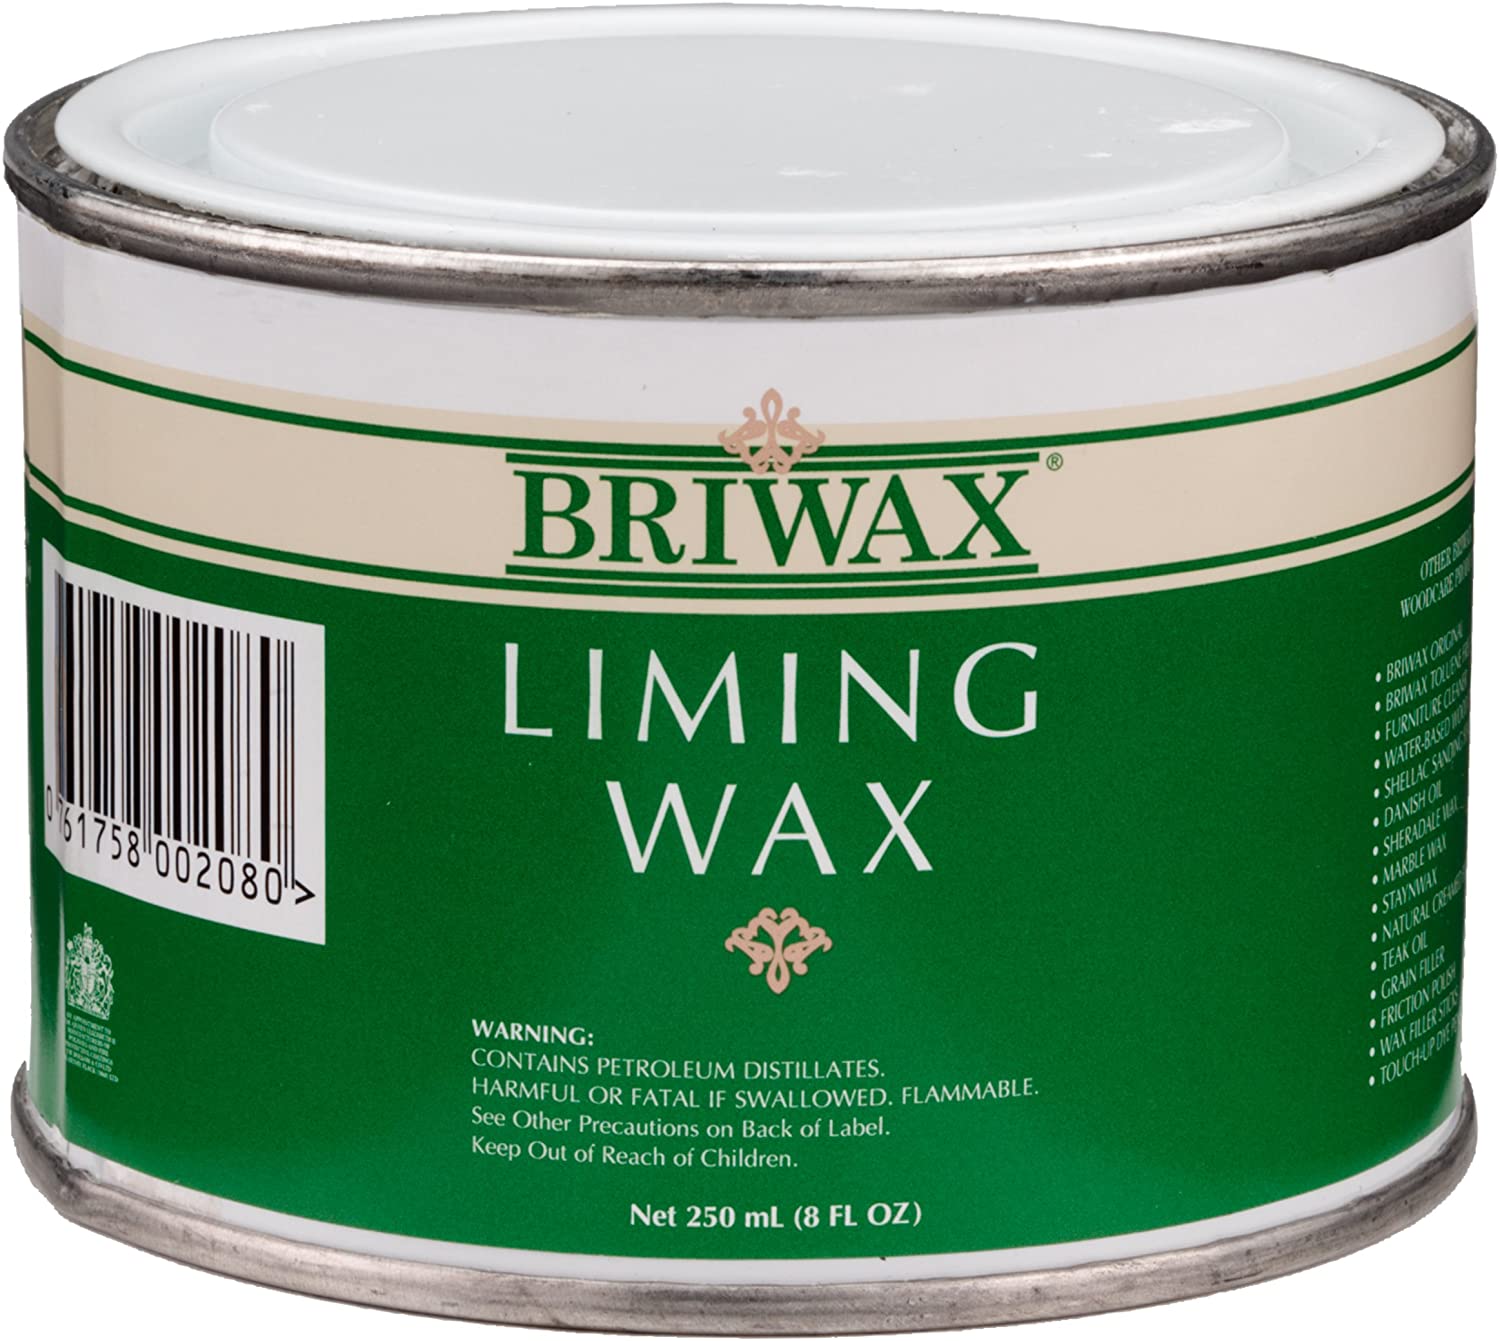 Briwax liming wax